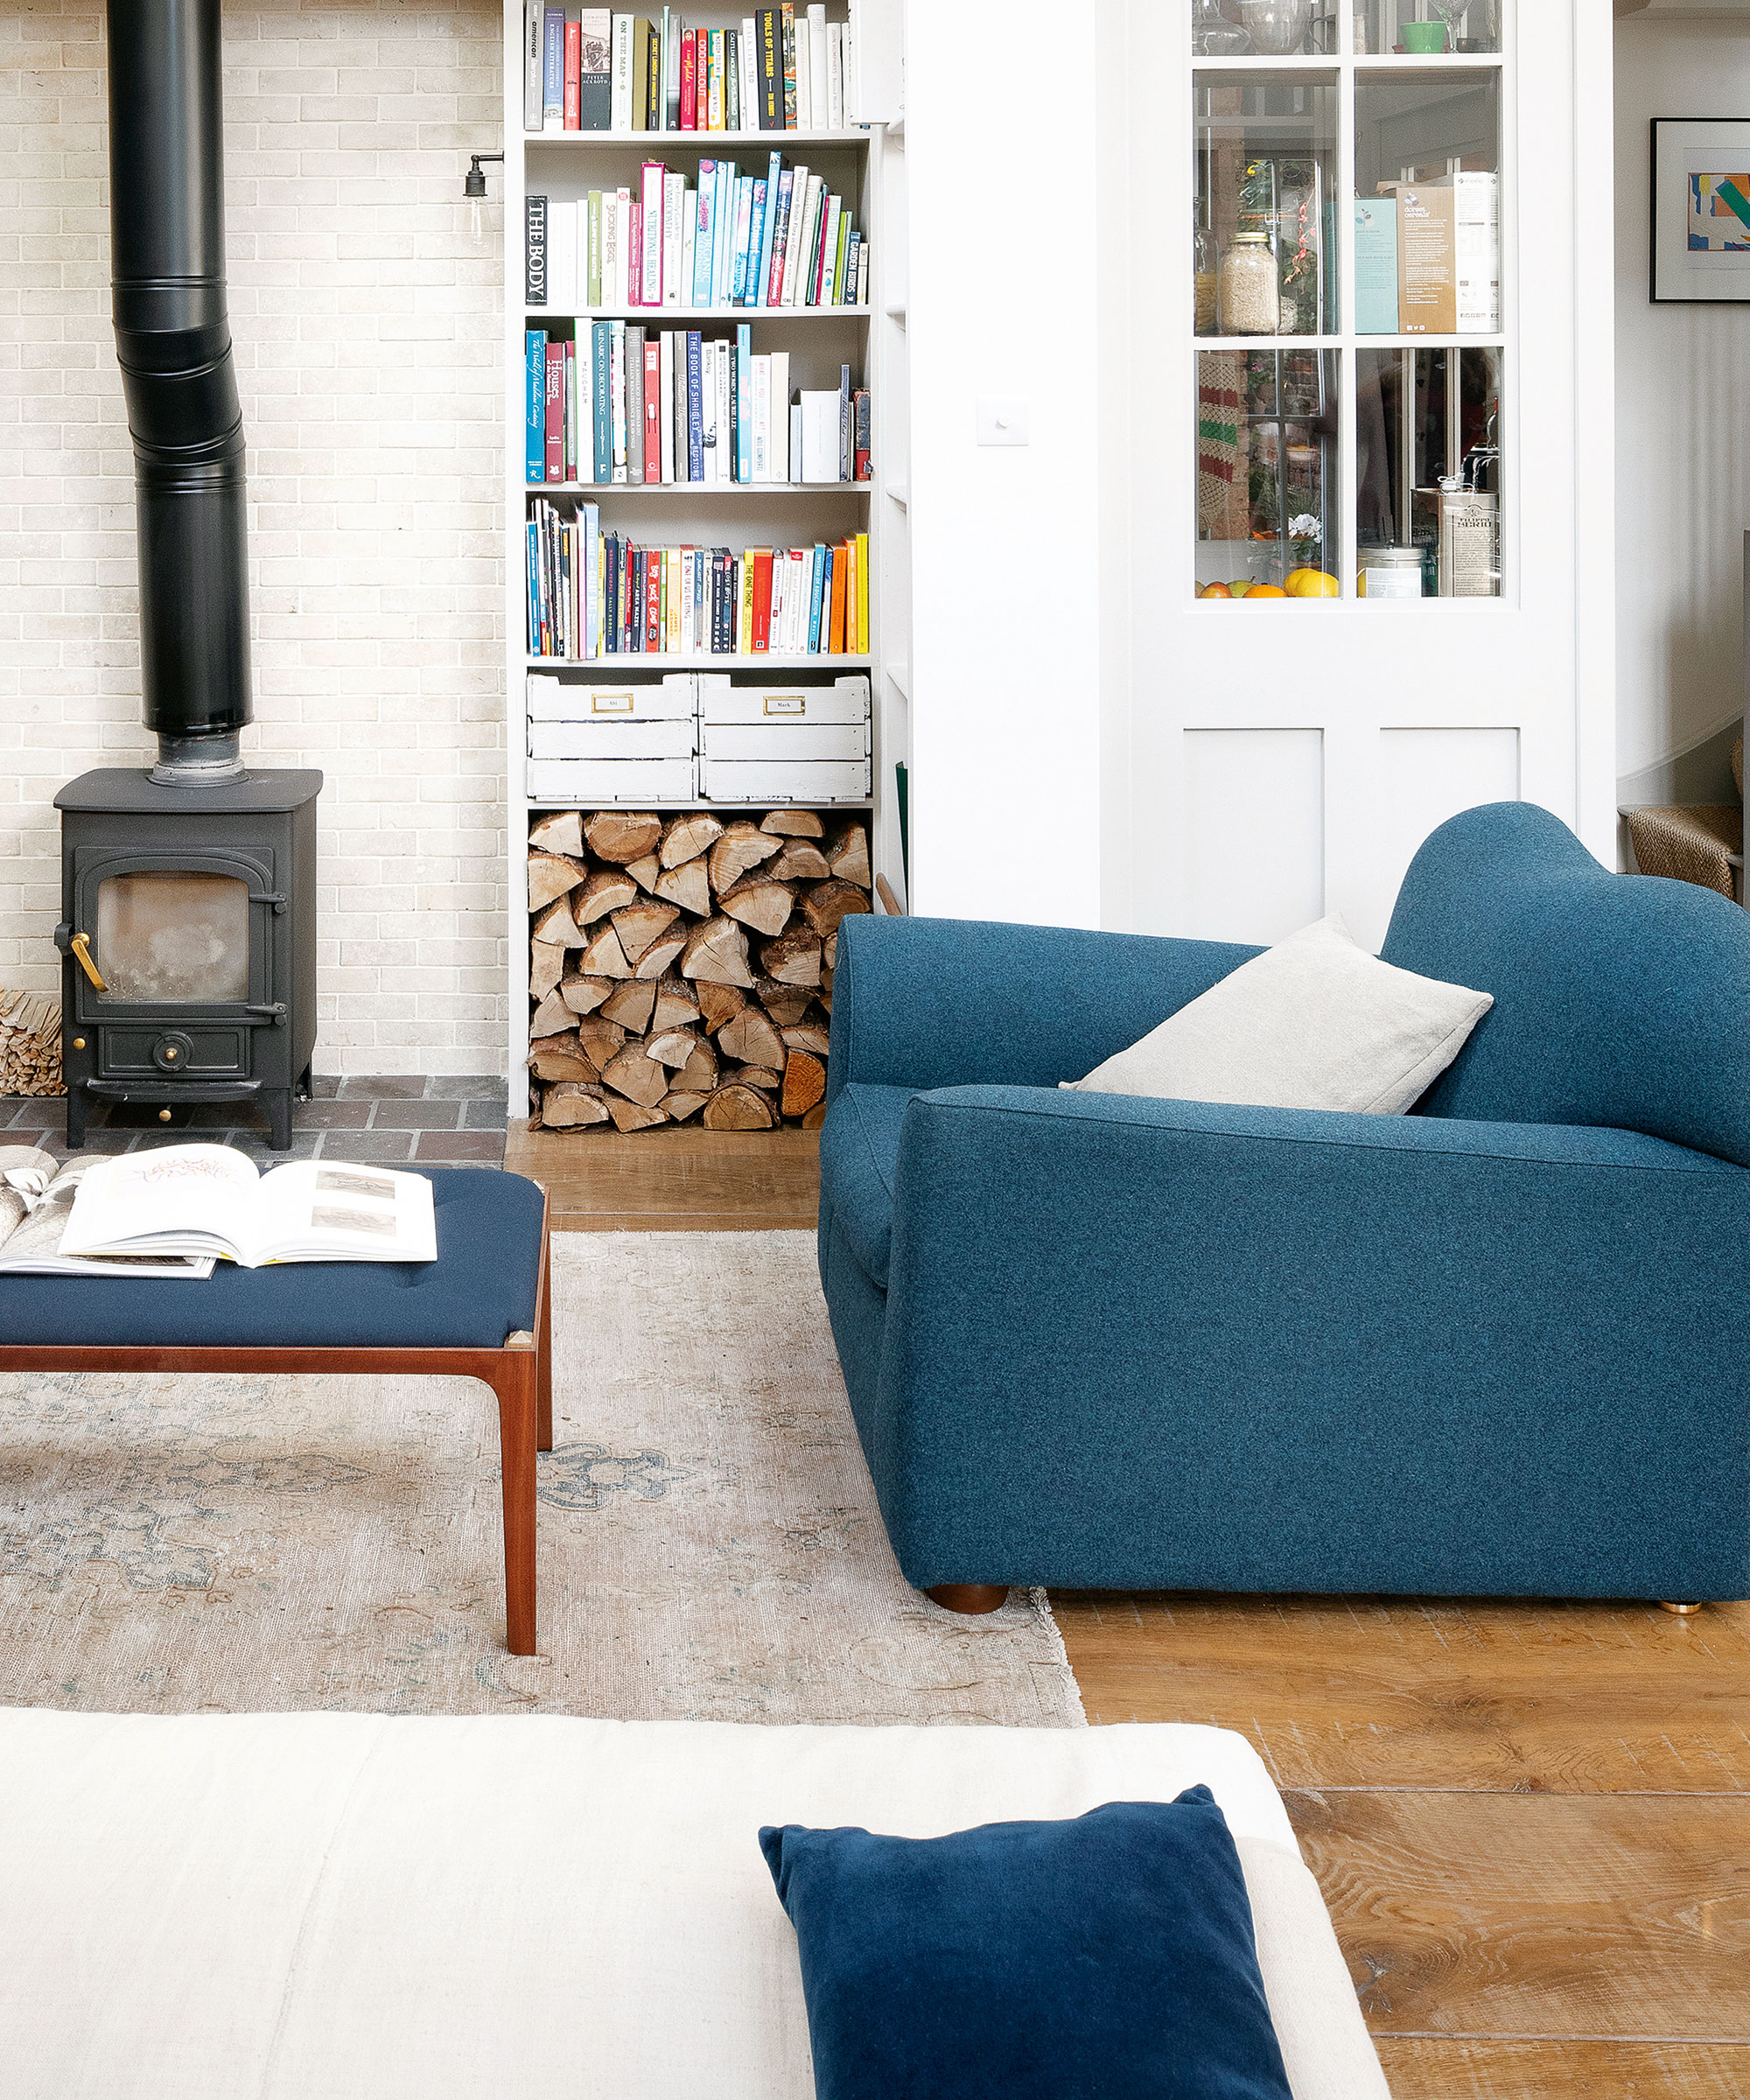 Minimalist living room ideas: 10 simple schemes to spark joy | Homes